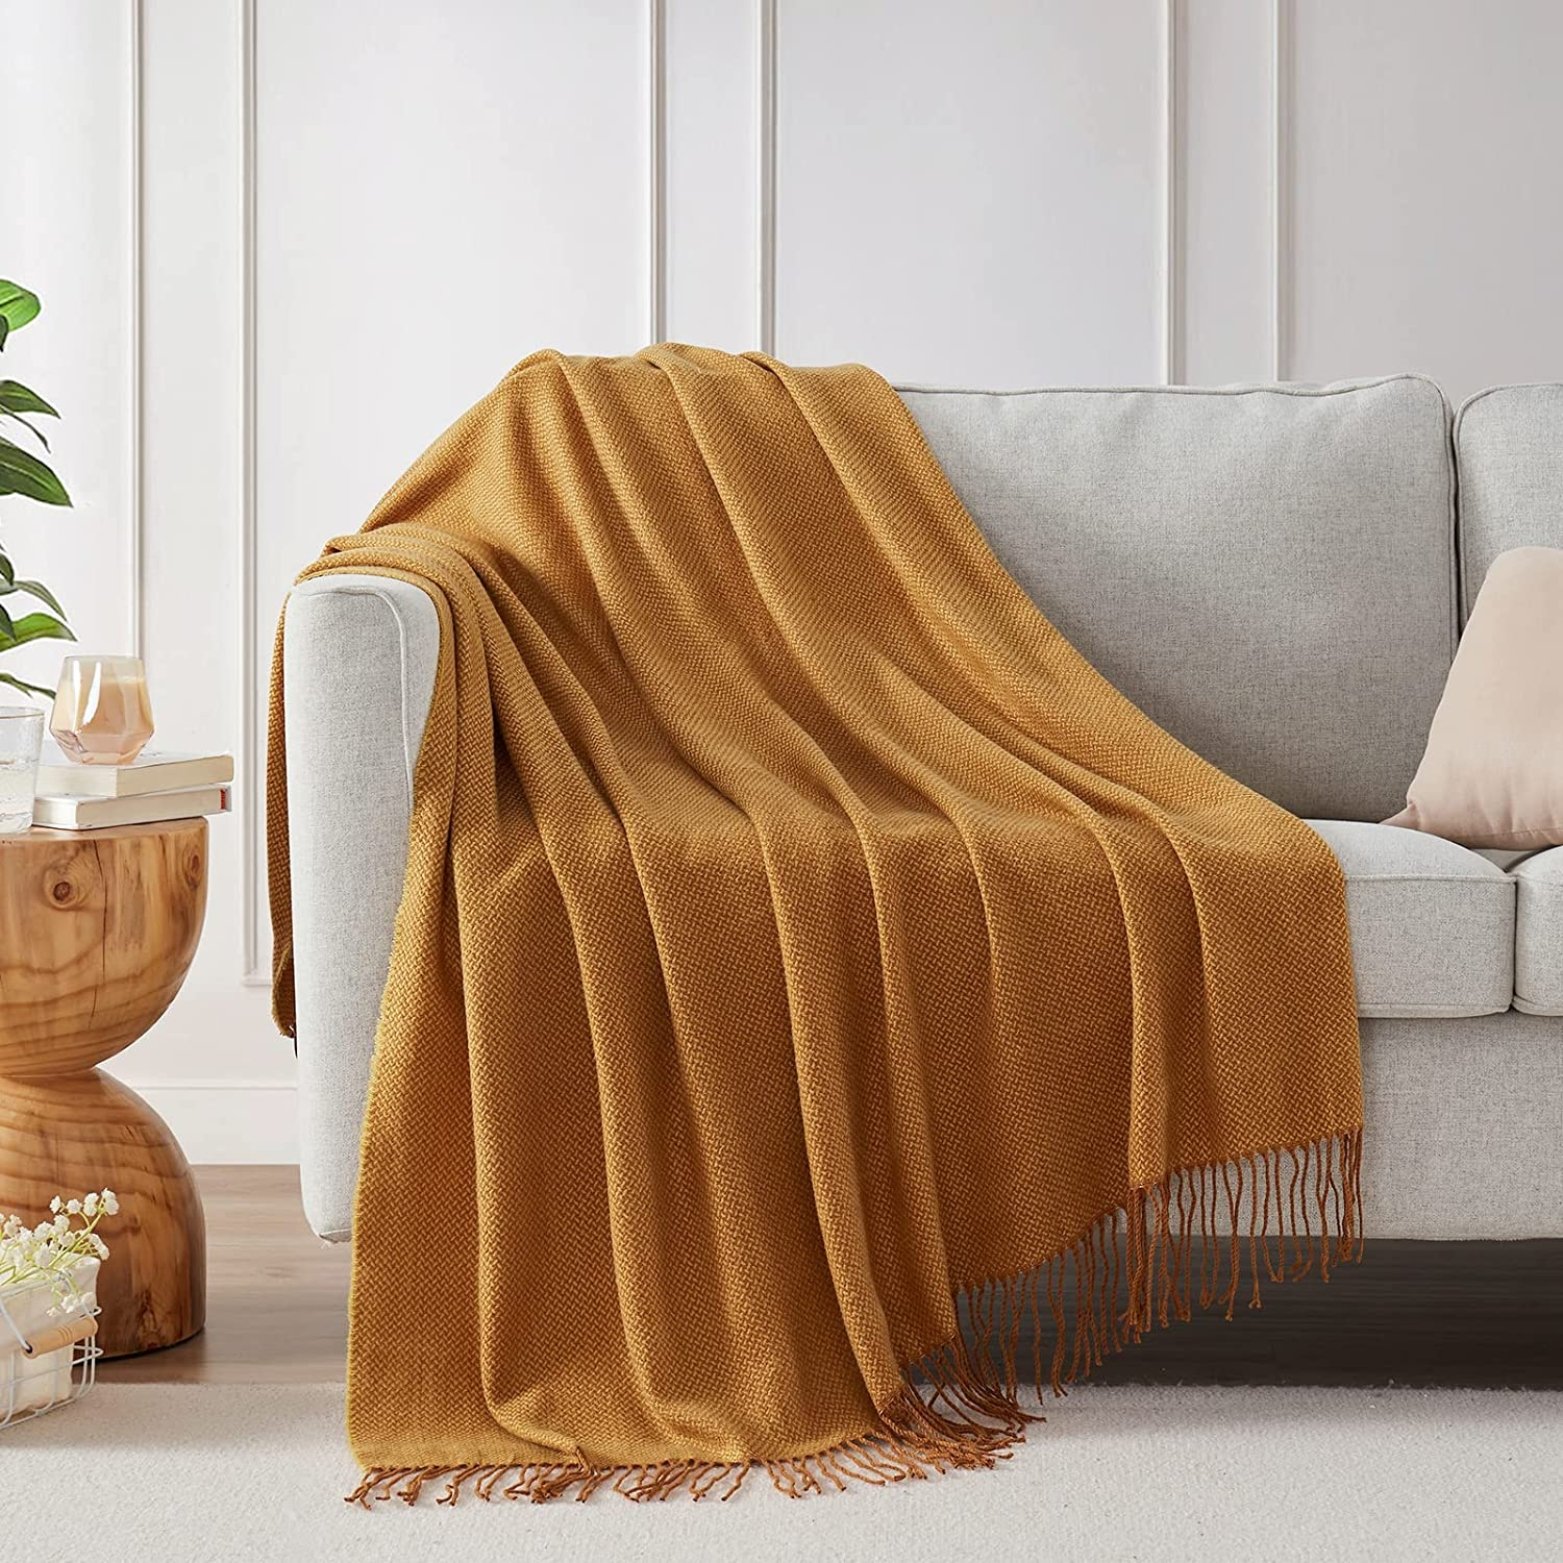 Textured Amber Throw Blanket with Tassels.jpg